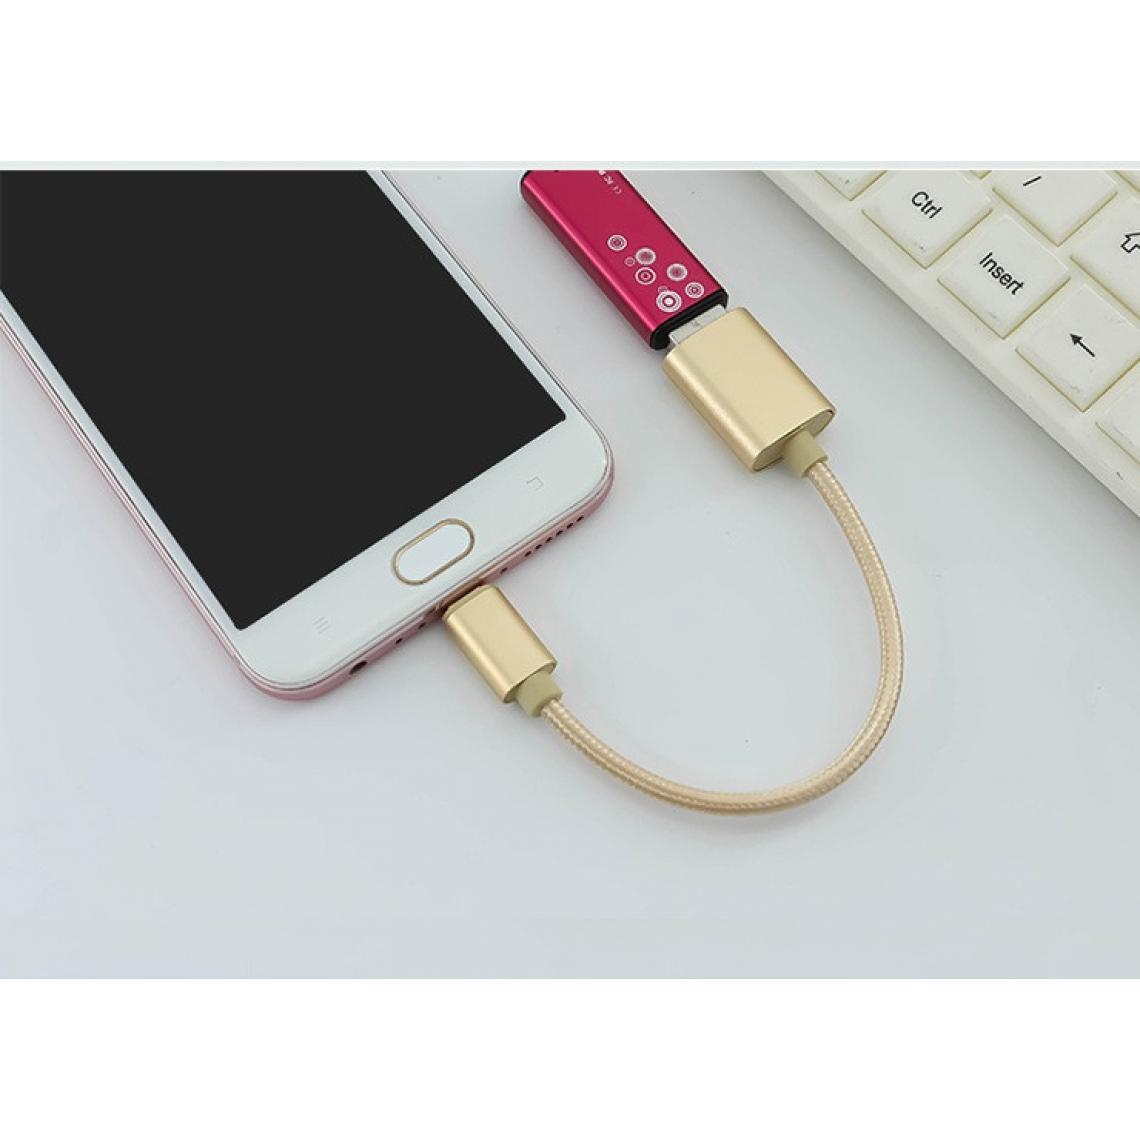 Shot - Adaptateur Type C/USB pour SAMSUNG Galaxy Tab S6 Lite Smartphone & MAC USB-C Clef (OR) - Autres accessoires smartphone